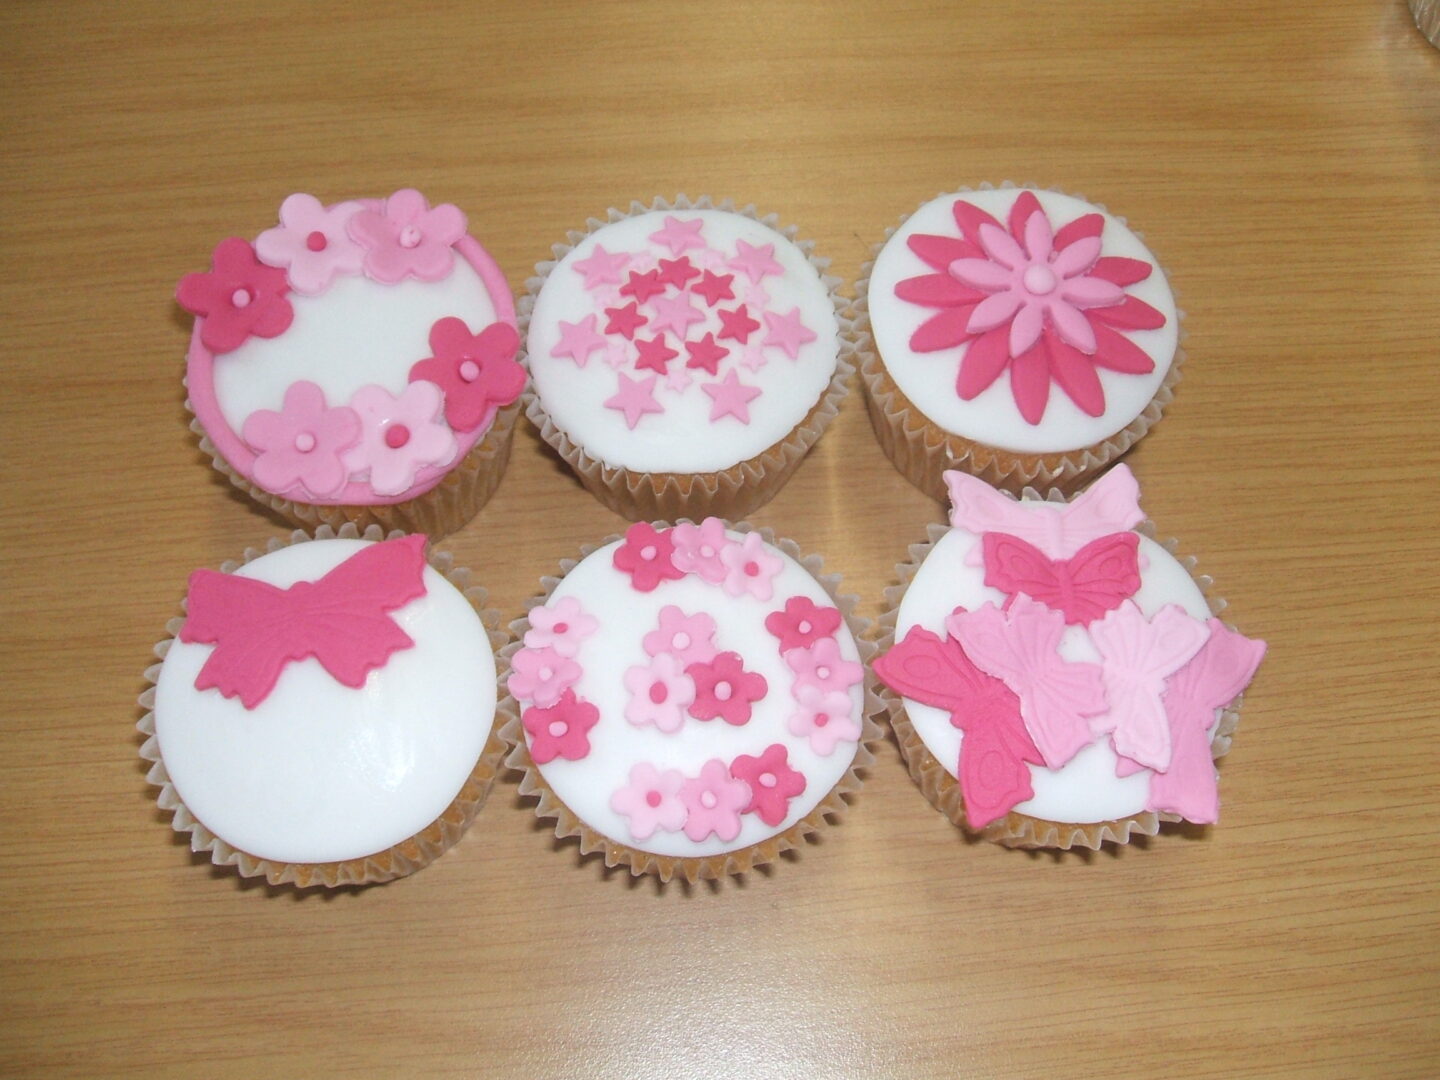 Cupcake Decorating Course